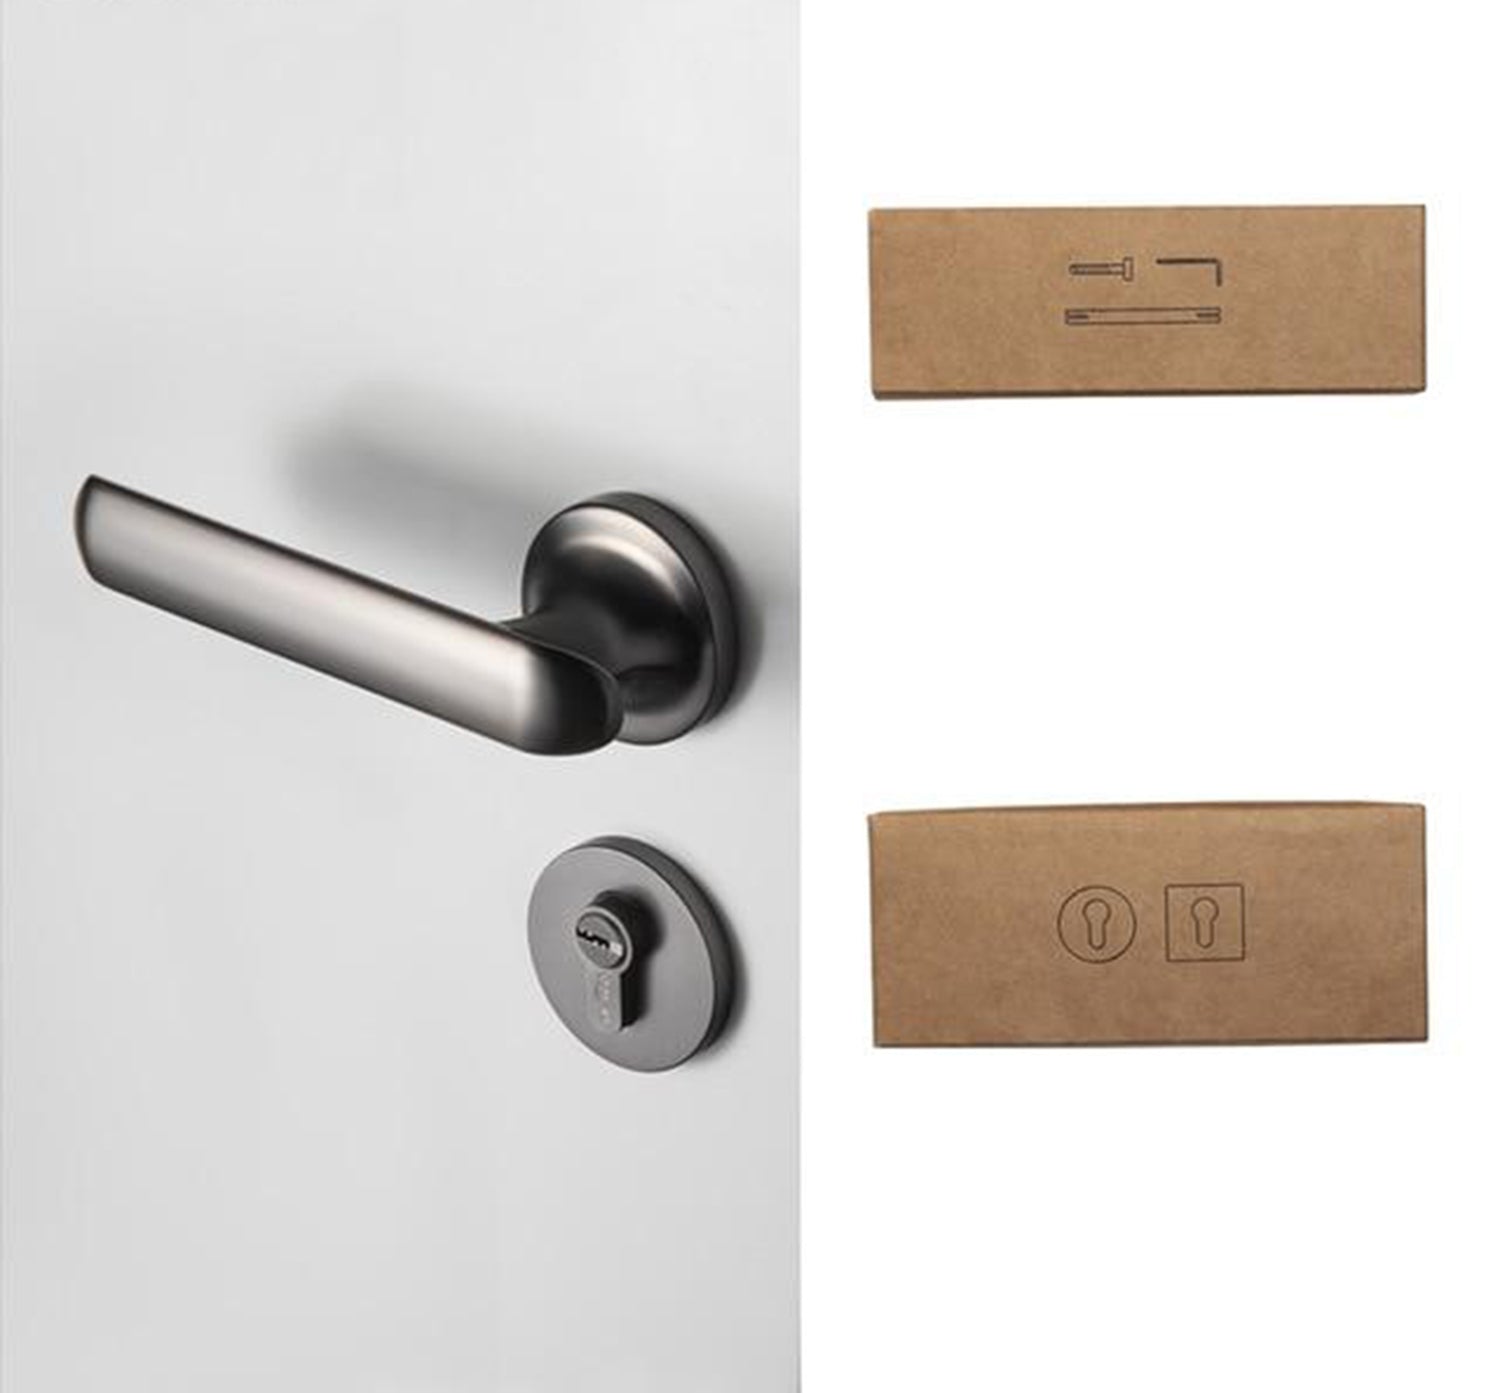 American Style Anti-theft Door Handle – Level Decor